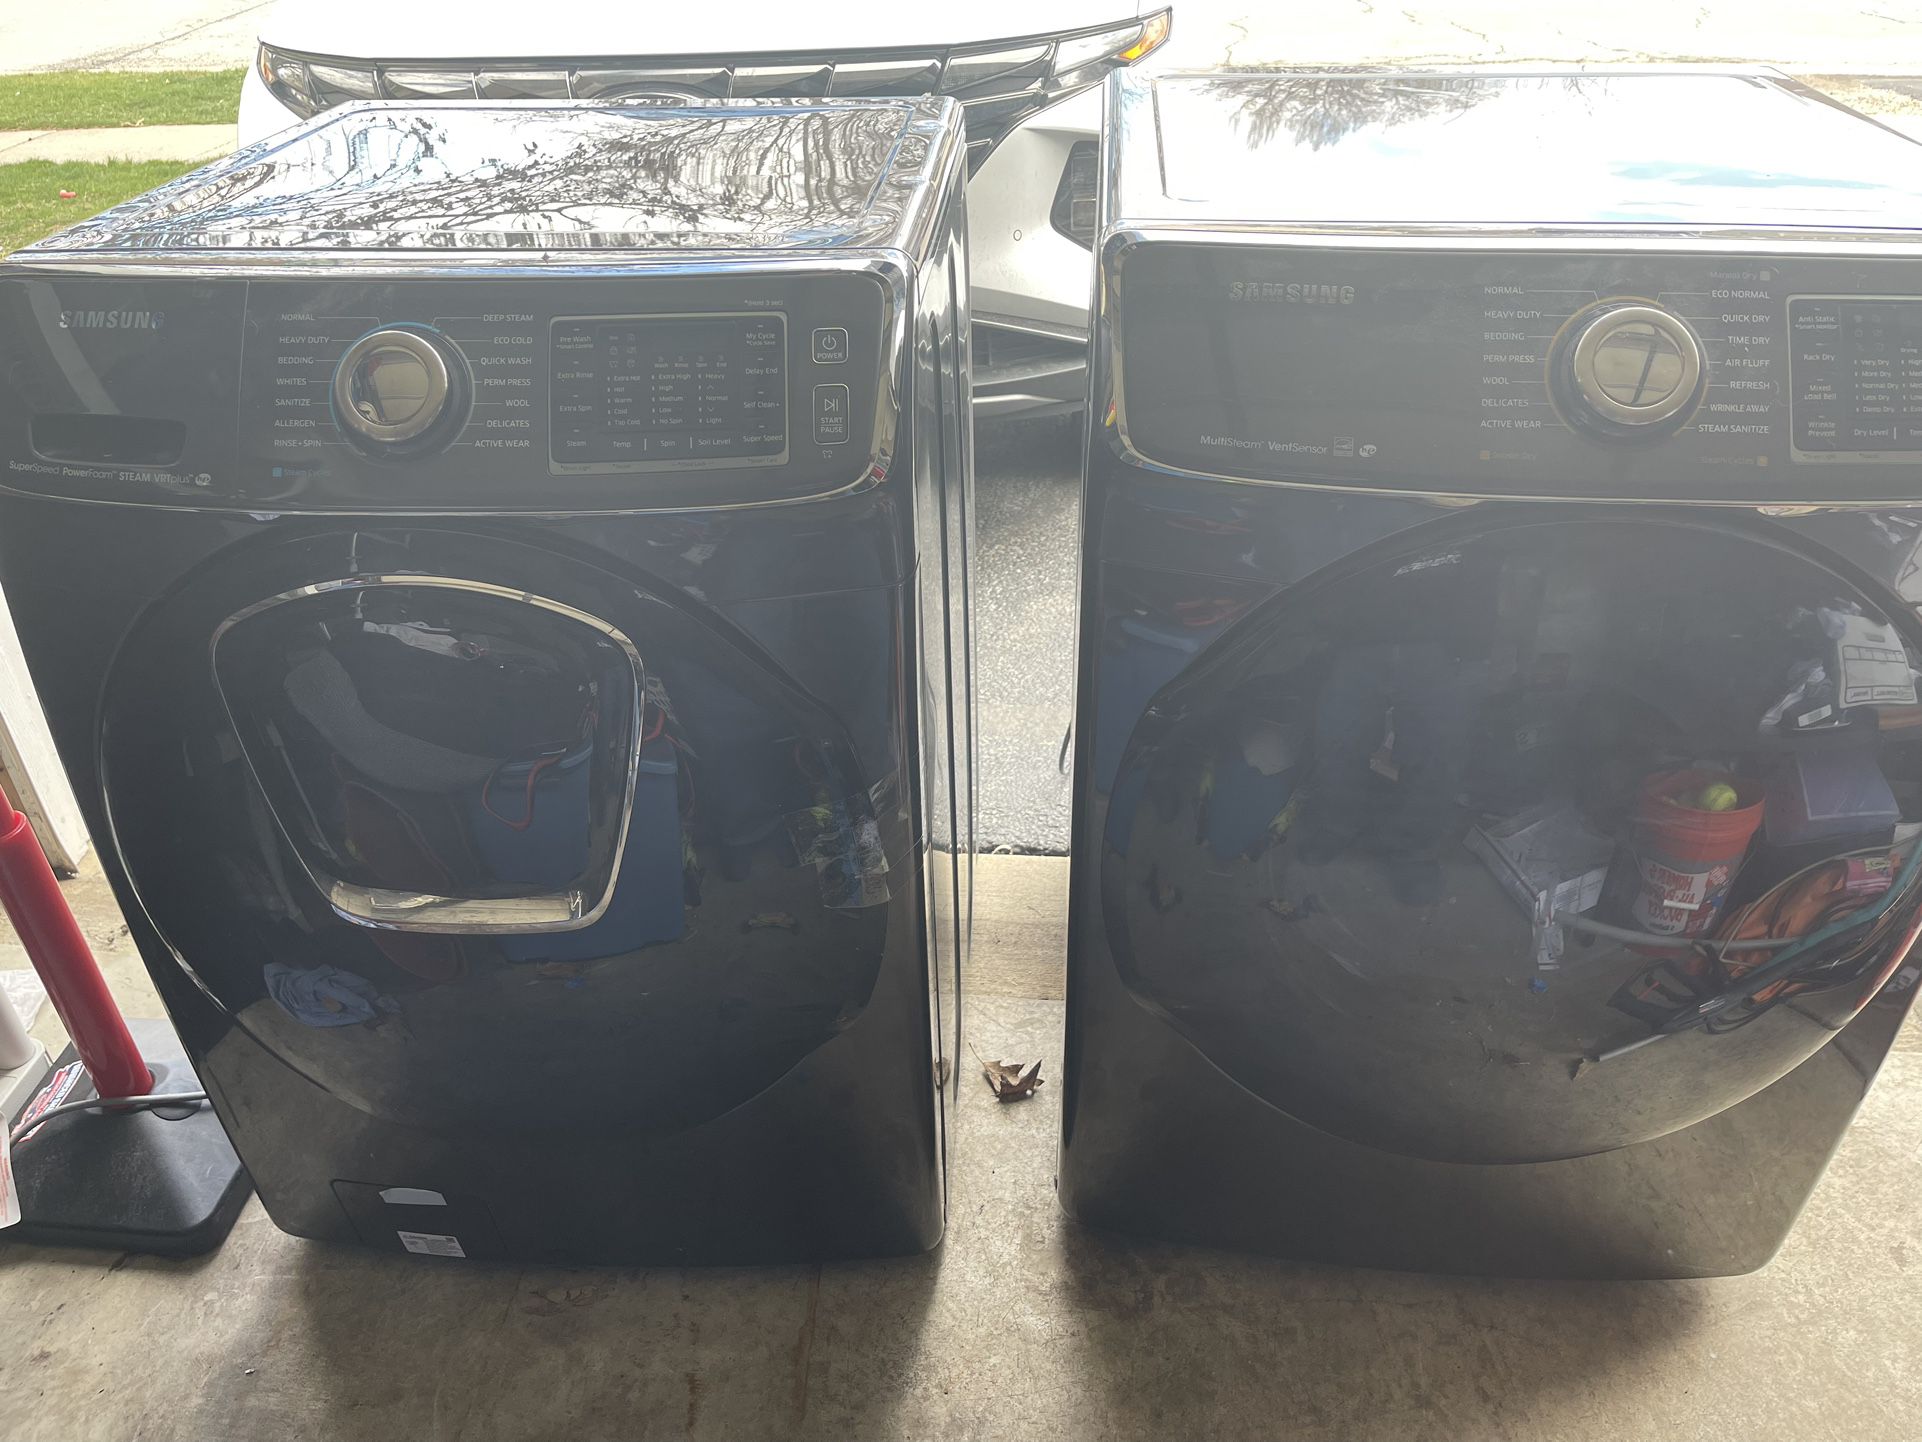 Samsung Front Load Washer/Dryer WF50K7500AV/2